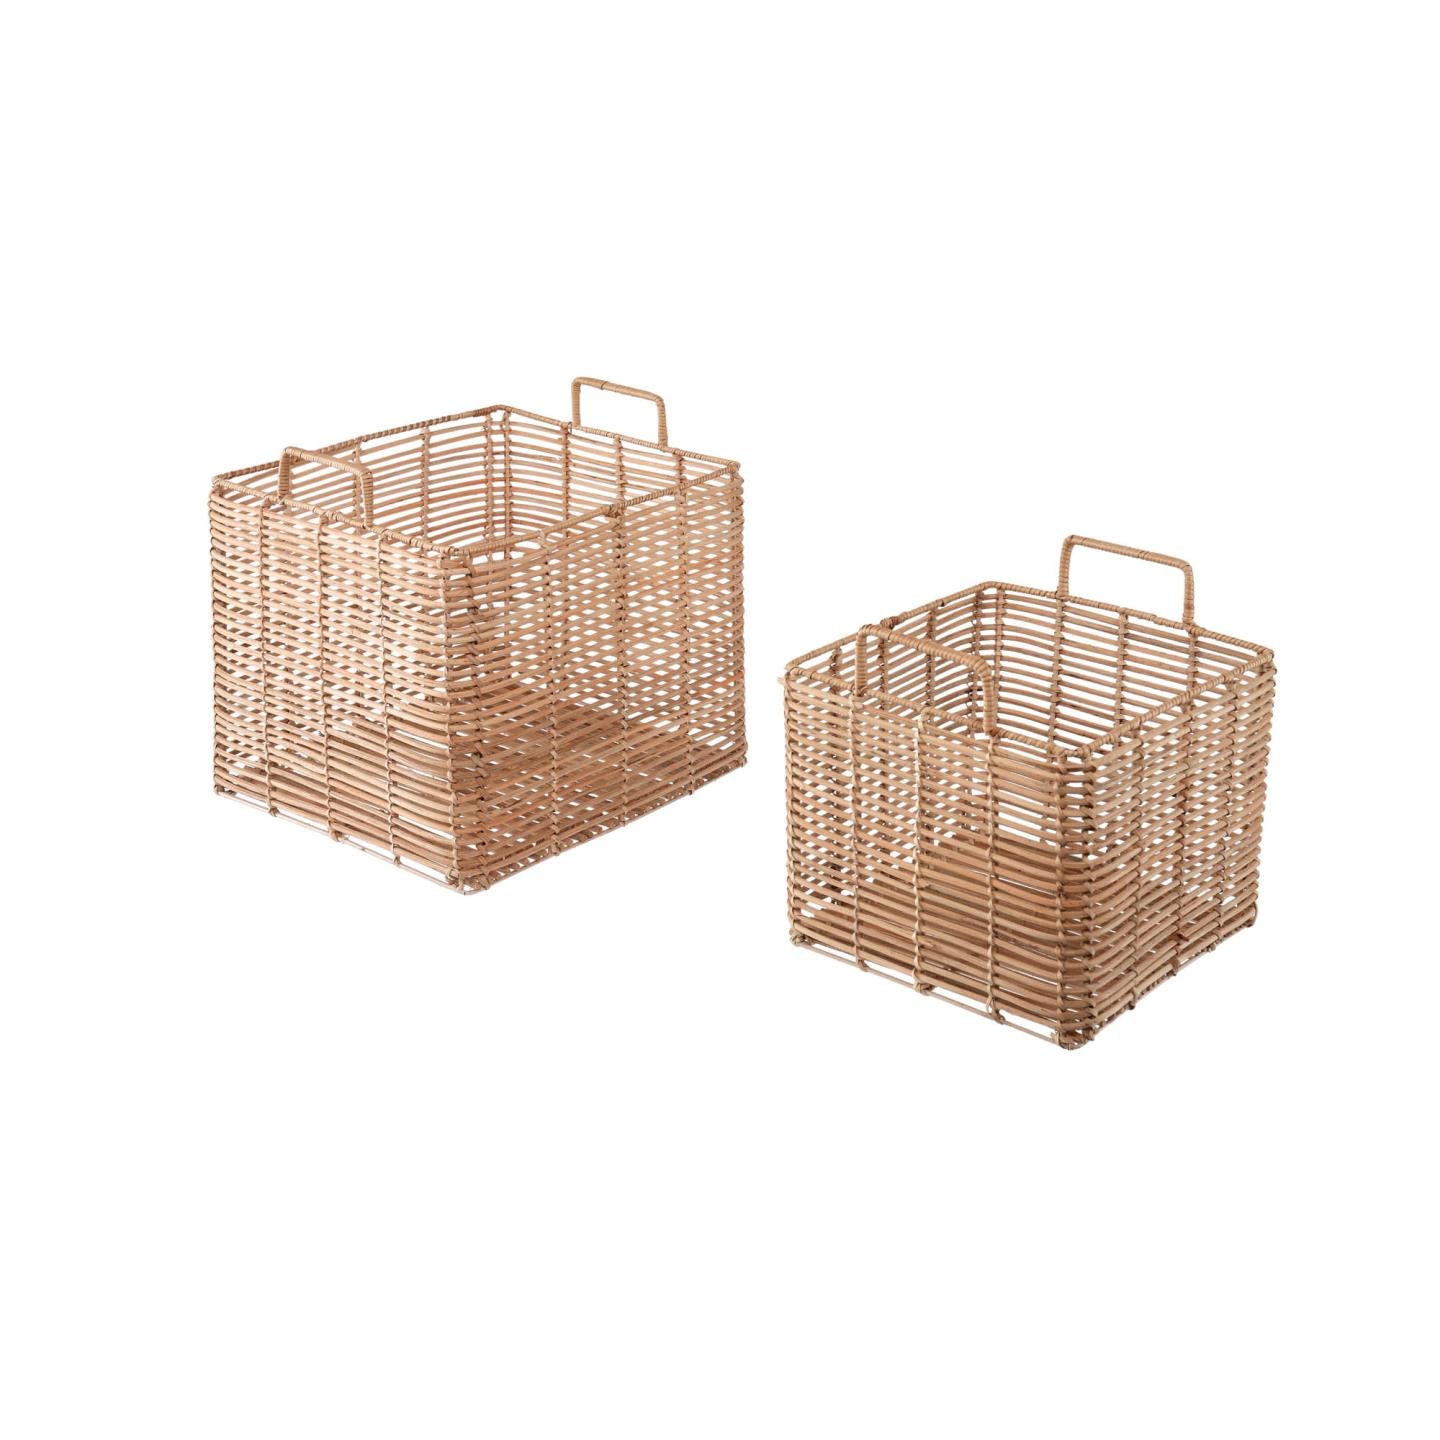 Dalina set of 2 square 100% rattan baskets